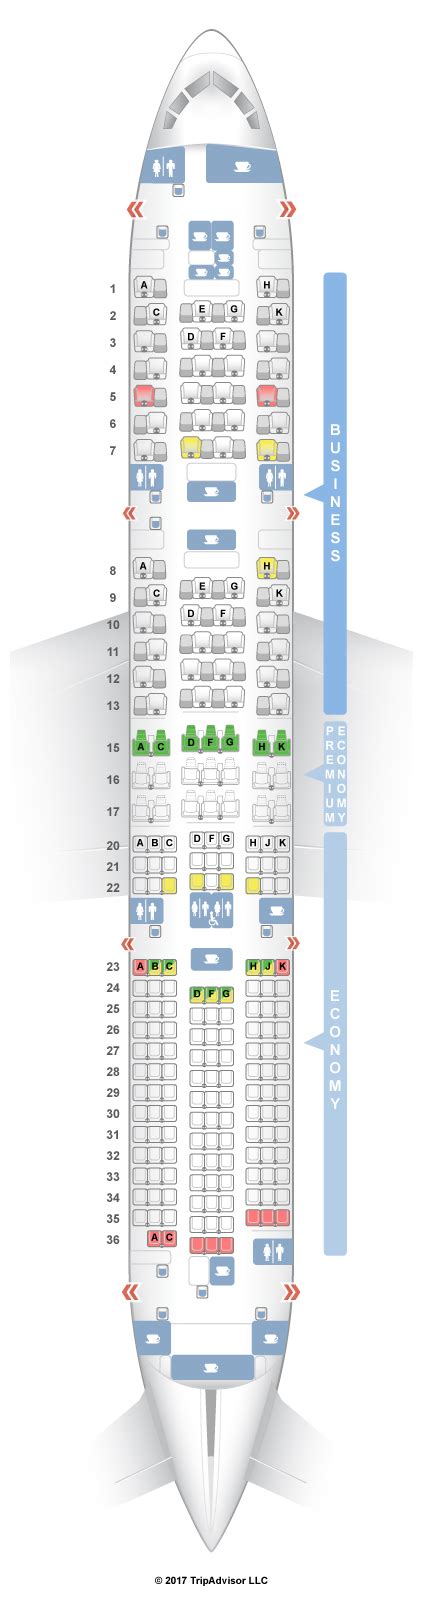 Seatguru Seat Map Ana Boeing 787 9 789 Layout 5